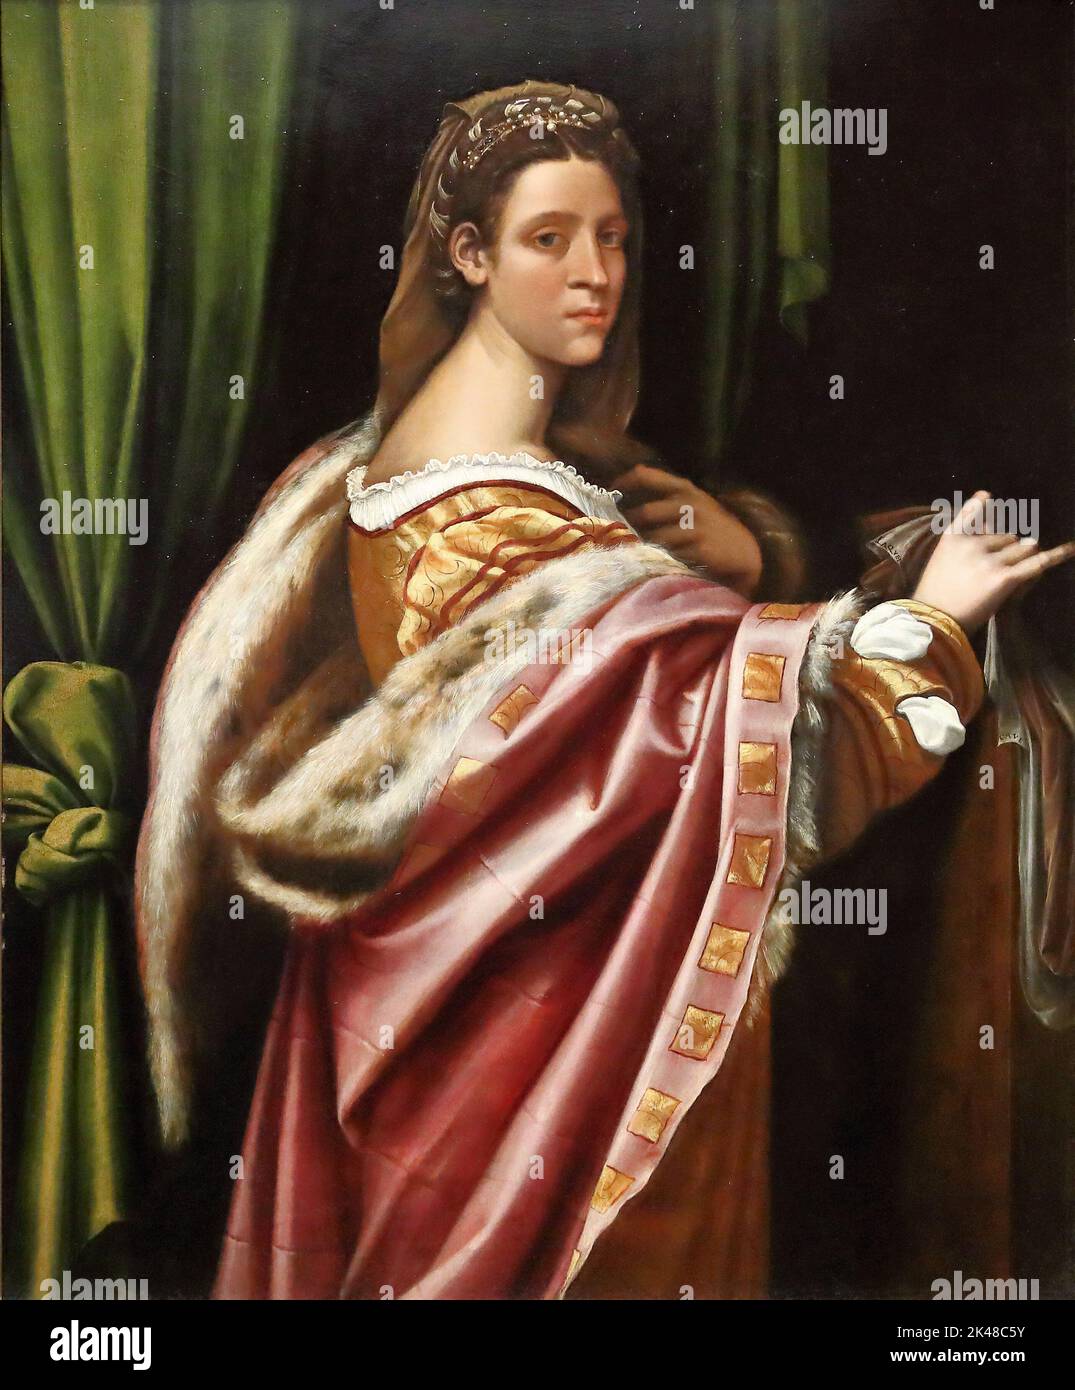 Portrait of a Lady by Italian High Renaissance painter Sebastiano del Piombo at the National Gallery, London, UK Stock Photo